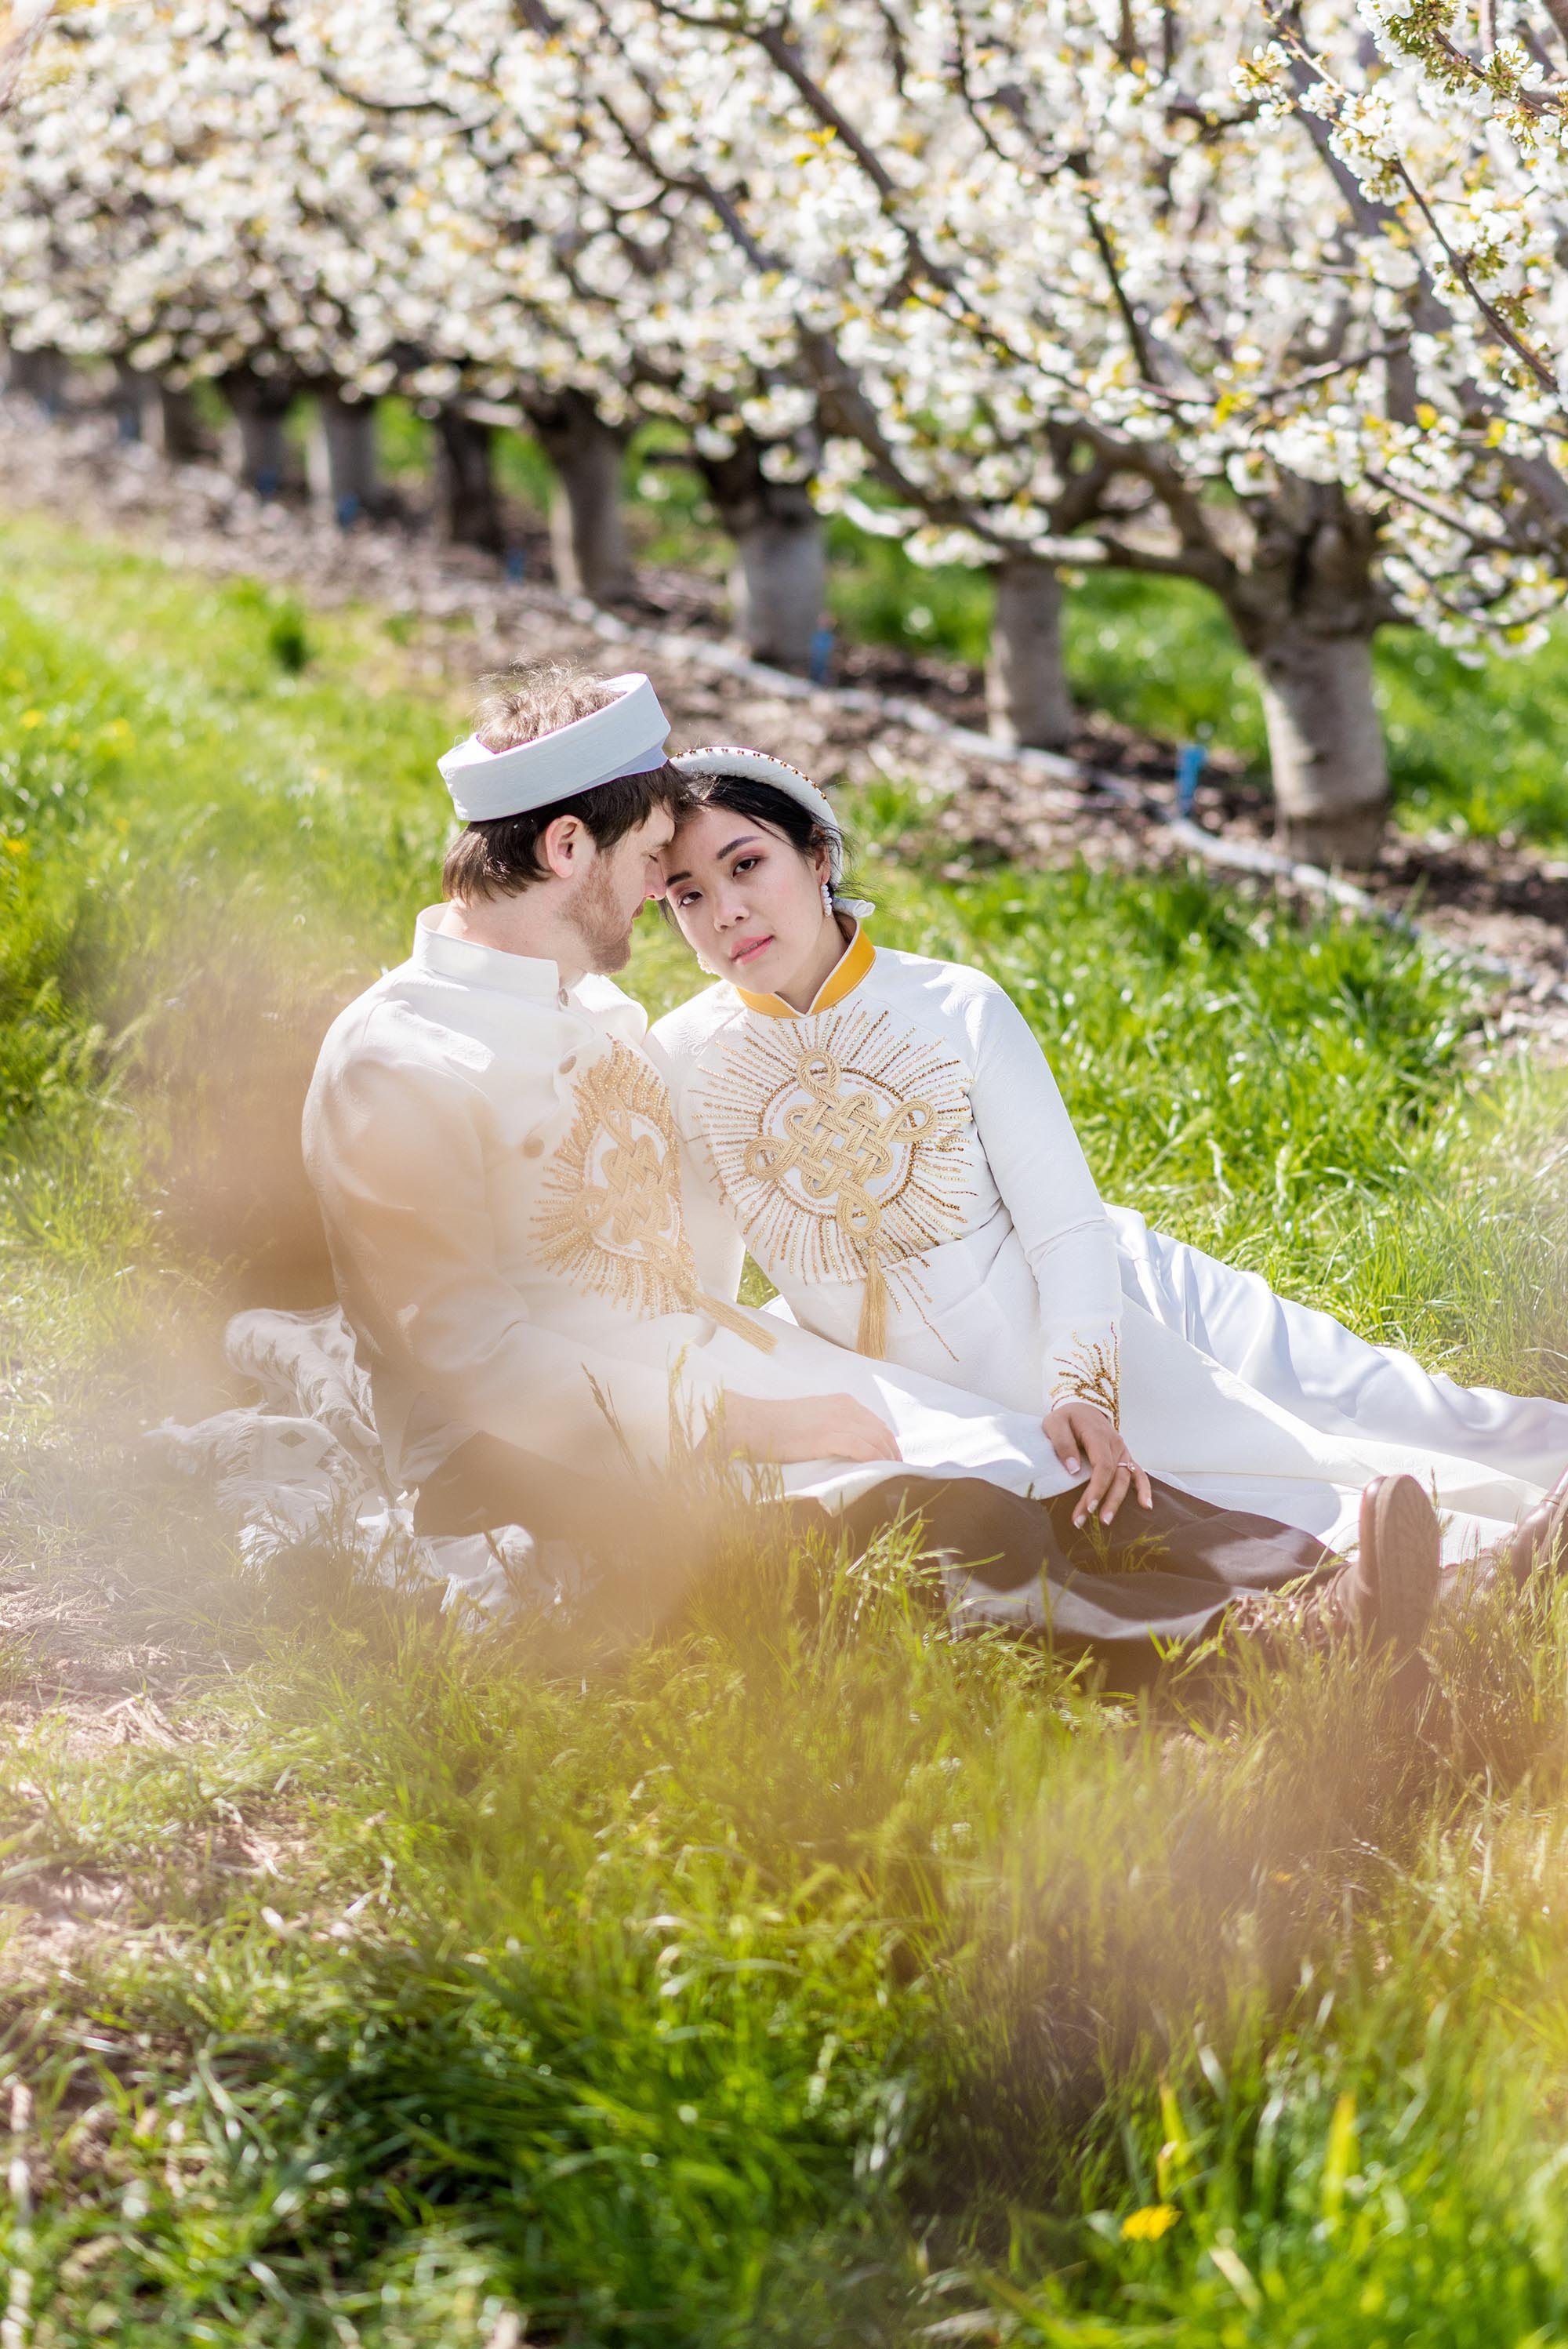 Alena-Leena-Mimosa-Wedding-Dress-Cherry-Blossom-16.jpg